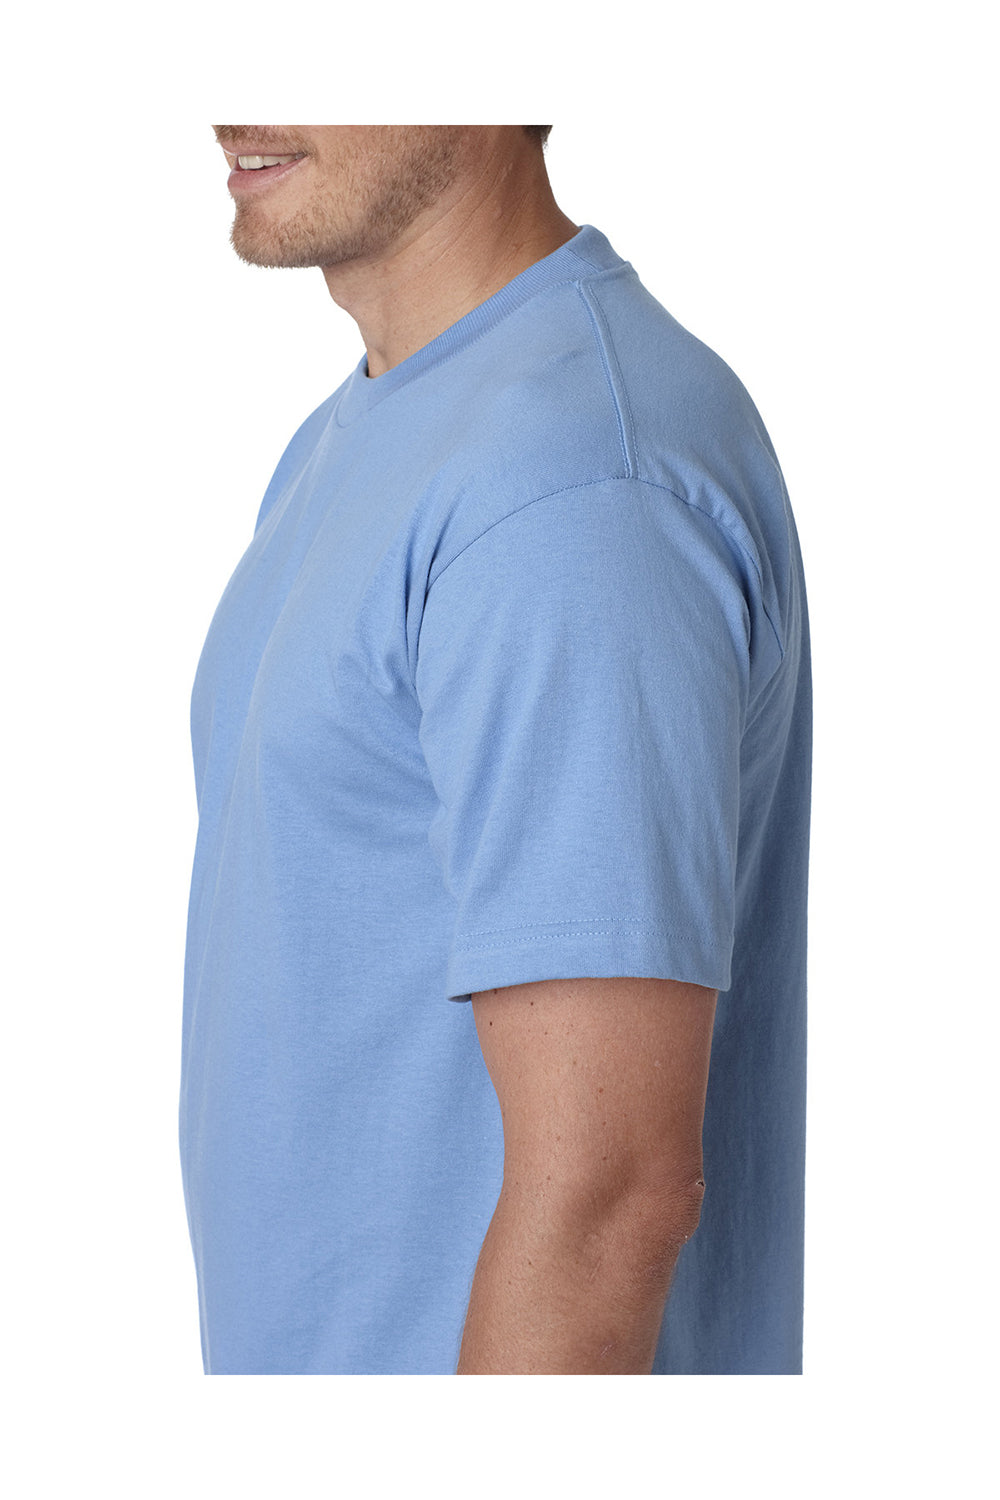 Bayside BA5100 Mens USA Made Short Sleeve Crewneck T-Shirt Carolina Blue Model Side